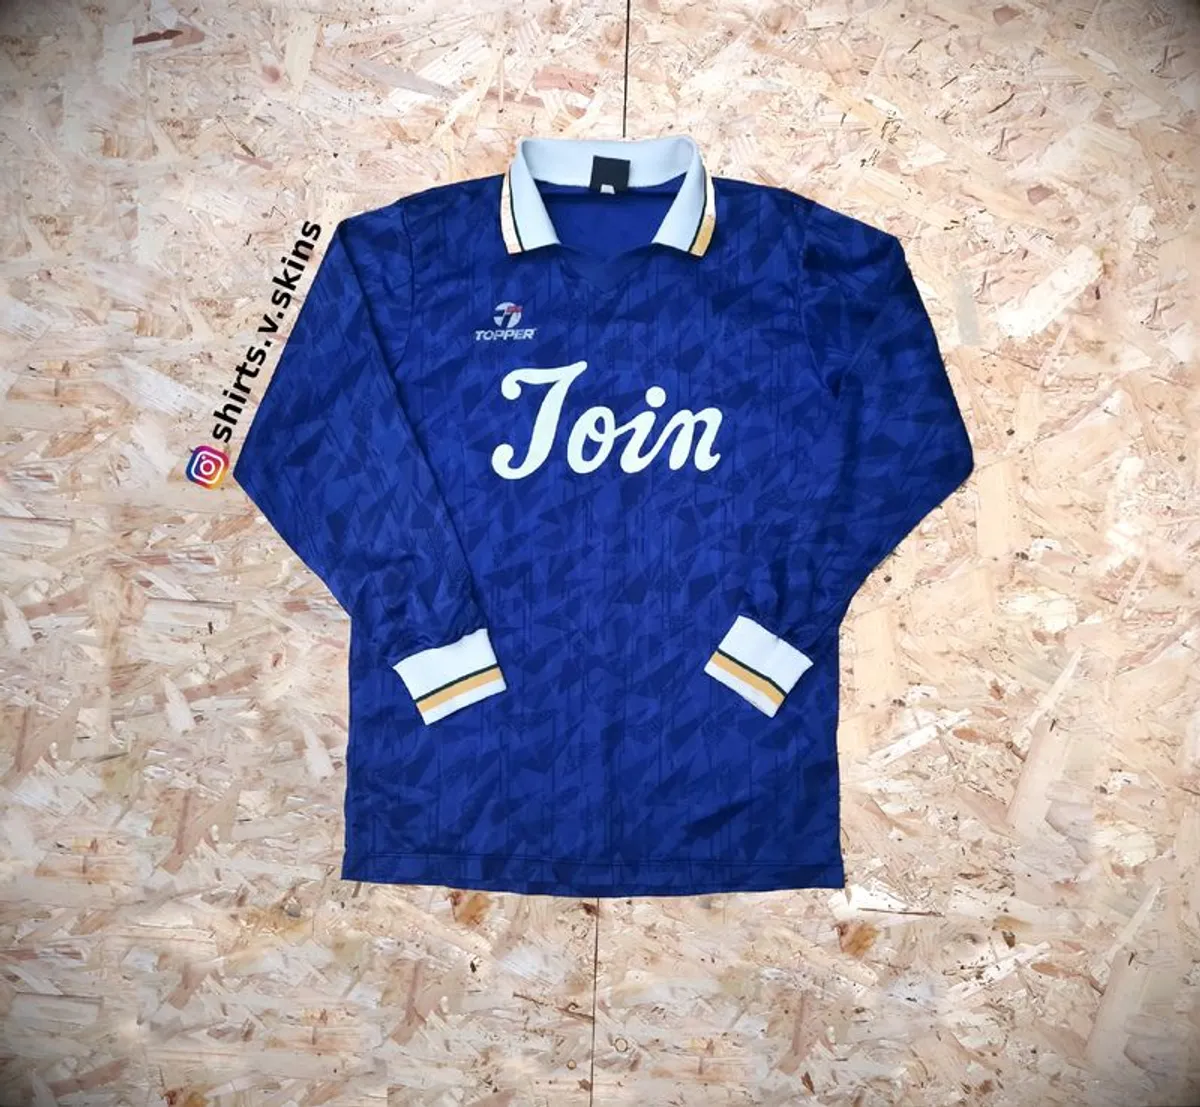 FREE POST Vintage Topper Football SHirt  1990s Retro  Jersey Shirt Soccer Football  Festival Oldschool Blue